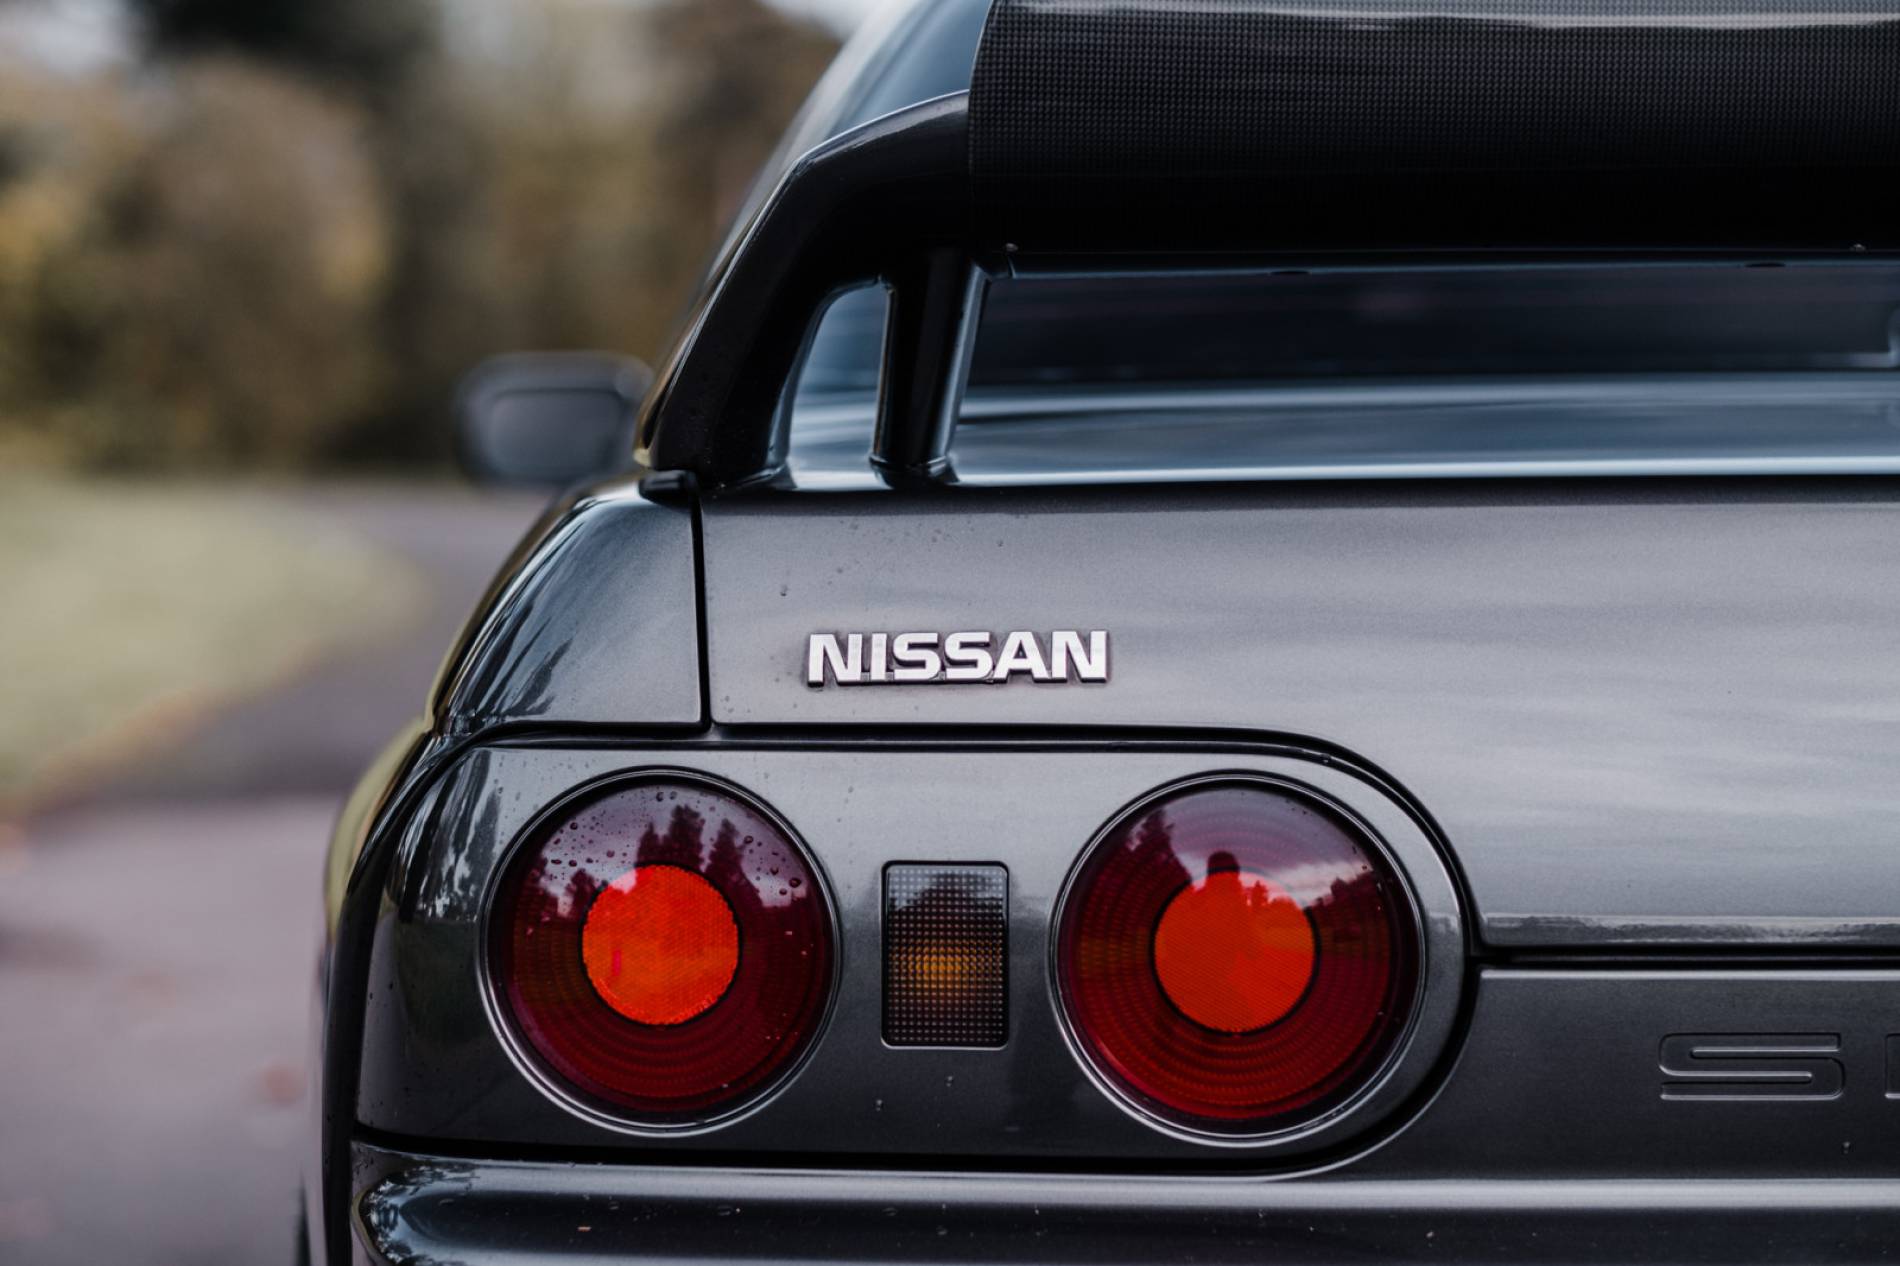 Nissan R32 GTR - 550HP